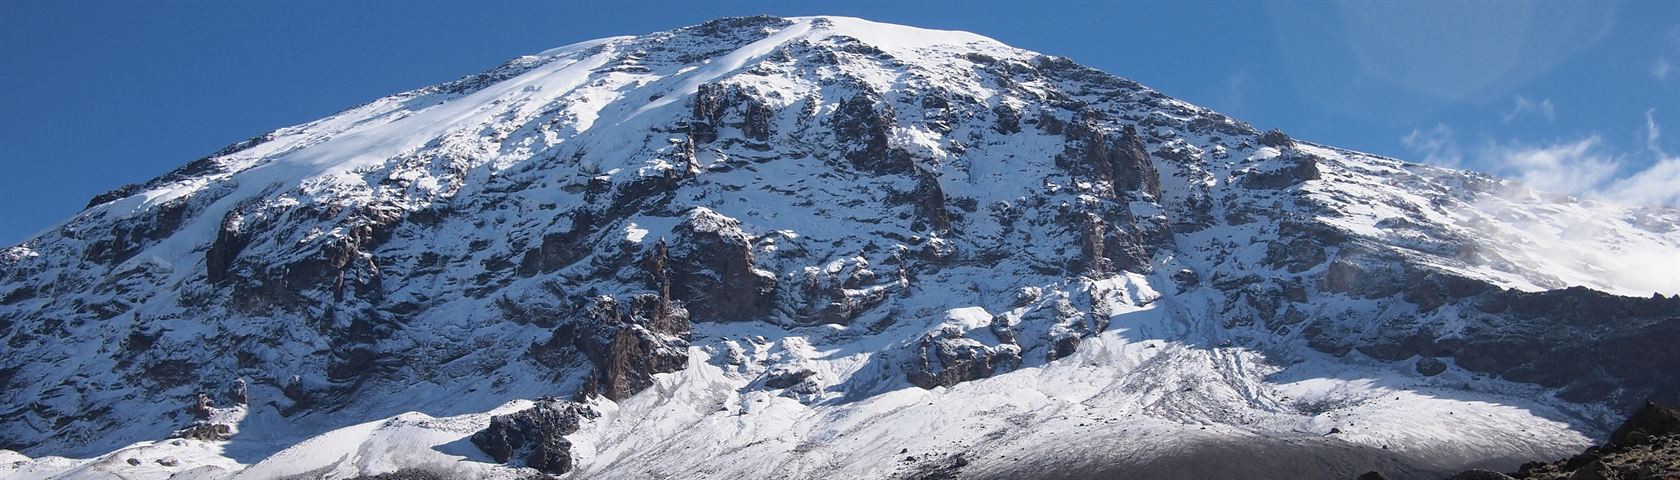 Snowy Kilimanjaro